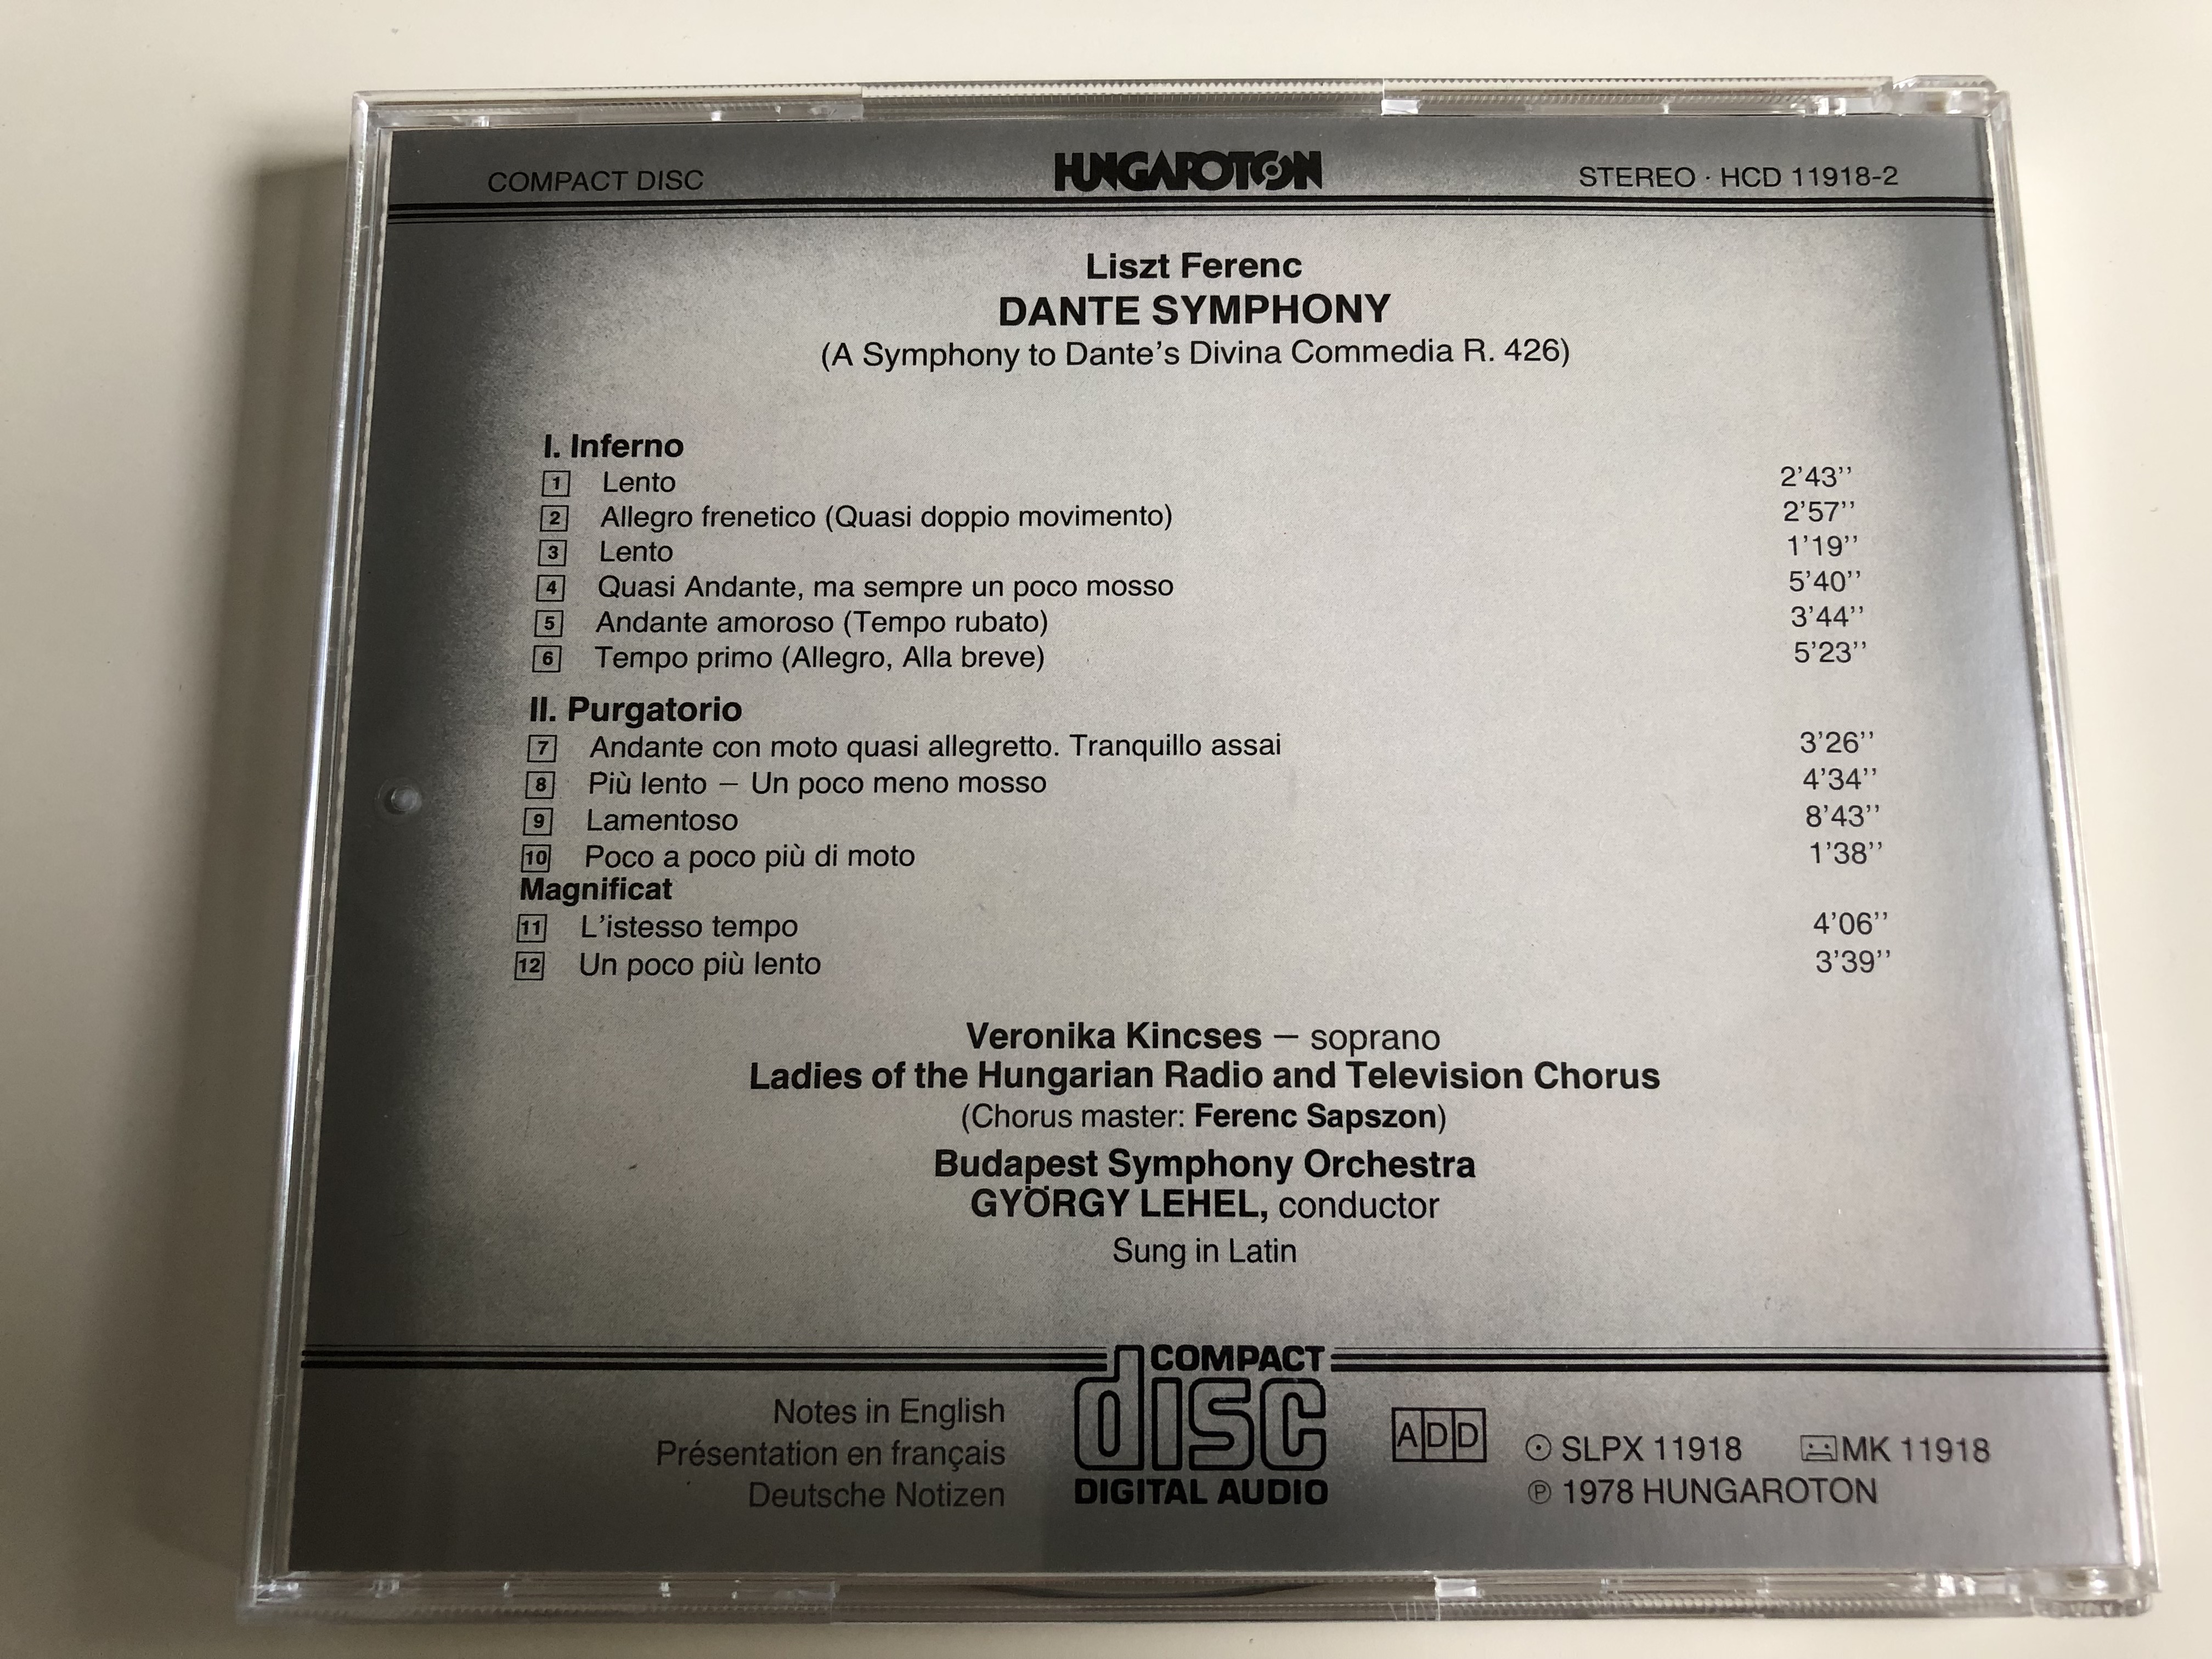 liszt-ferenc-dante-symphony-veronika-kincses-soprano-budapest-symphony-orchestra-conducted-by-gy-rgy-lehel-hungaroton-hcd-11918-2-6-.jpg